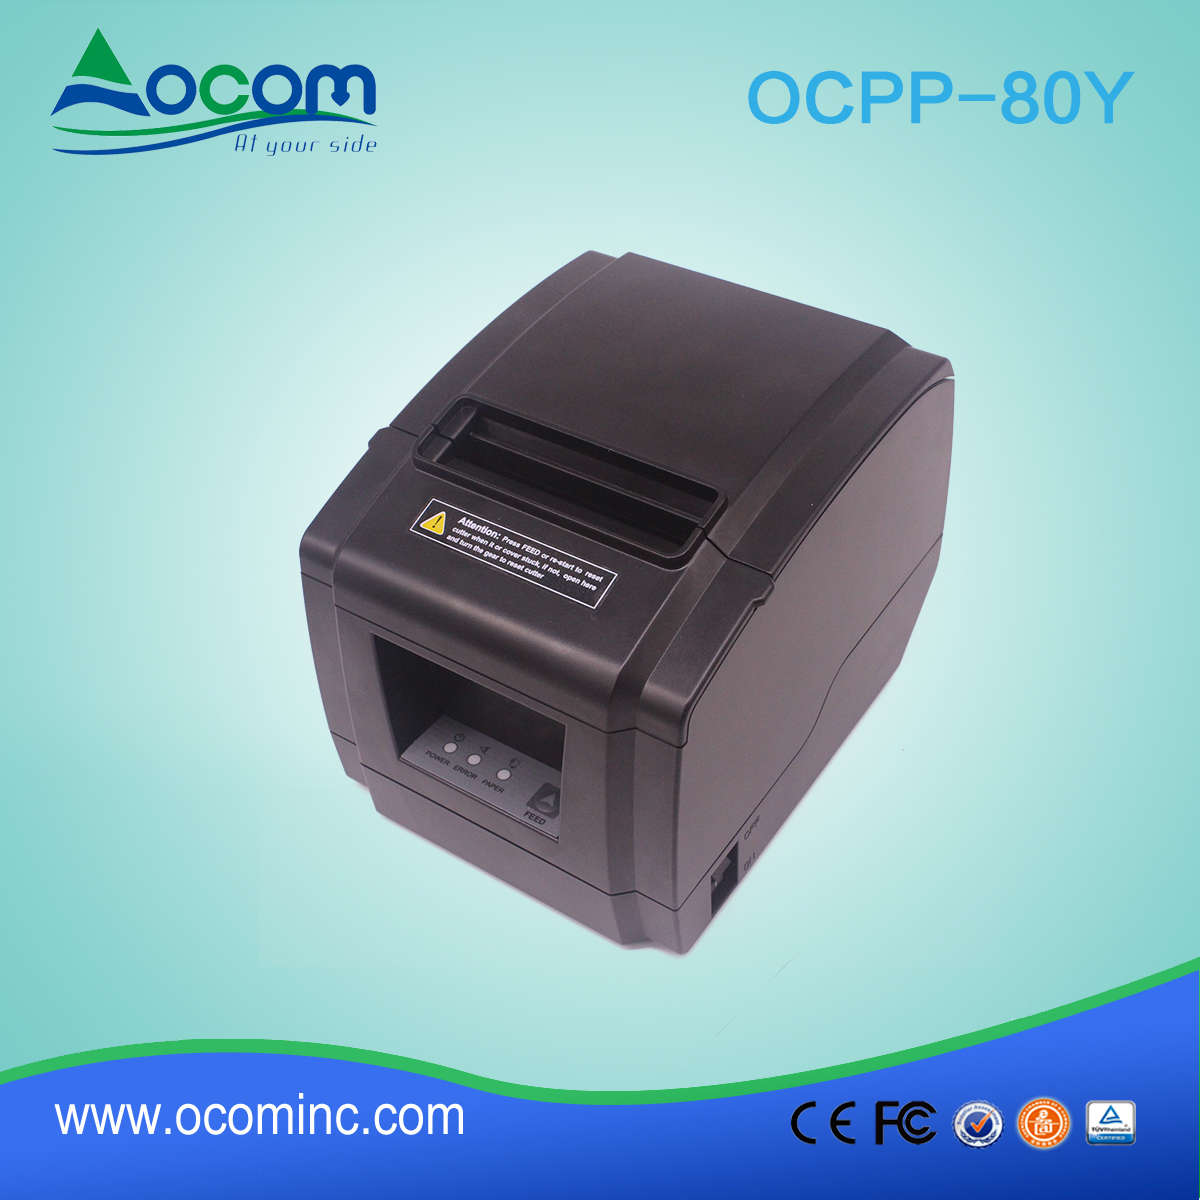 OCPP-80Y-U New Model 80mm thermal Receipt Printer with Auto Cutter USB Port